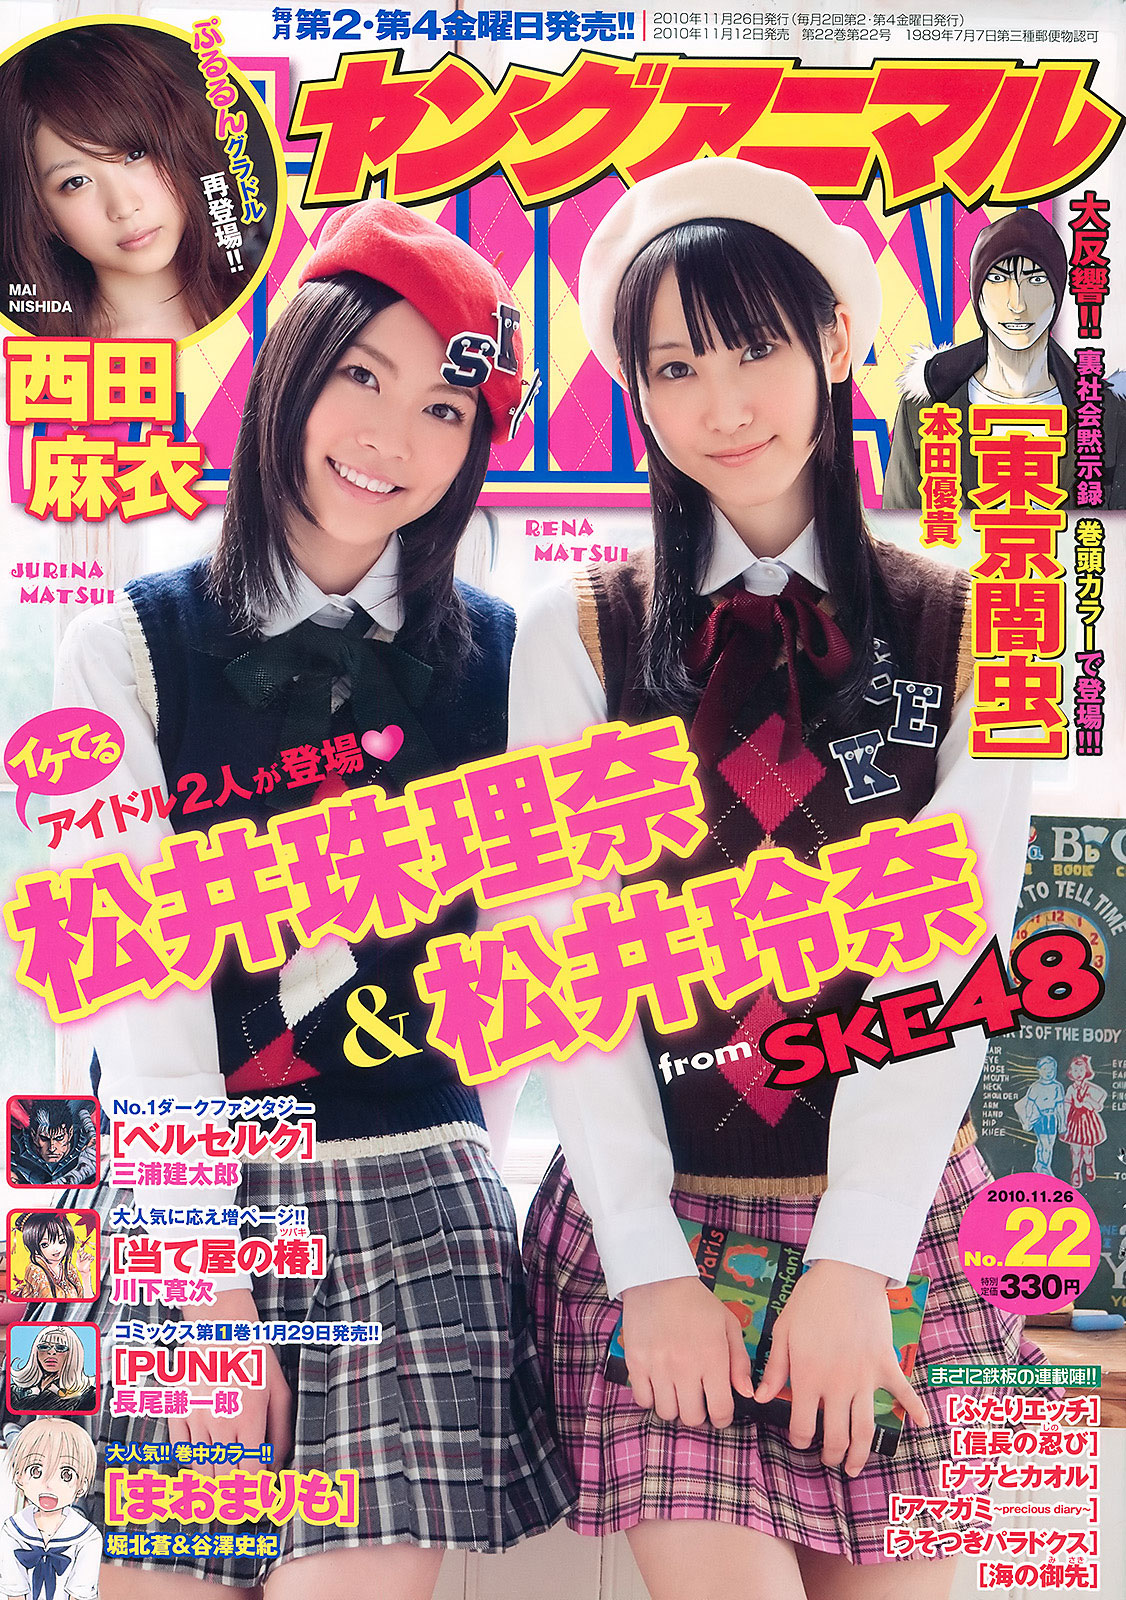 SKE48 Jurina and Rena Matsui Young Animal magazine